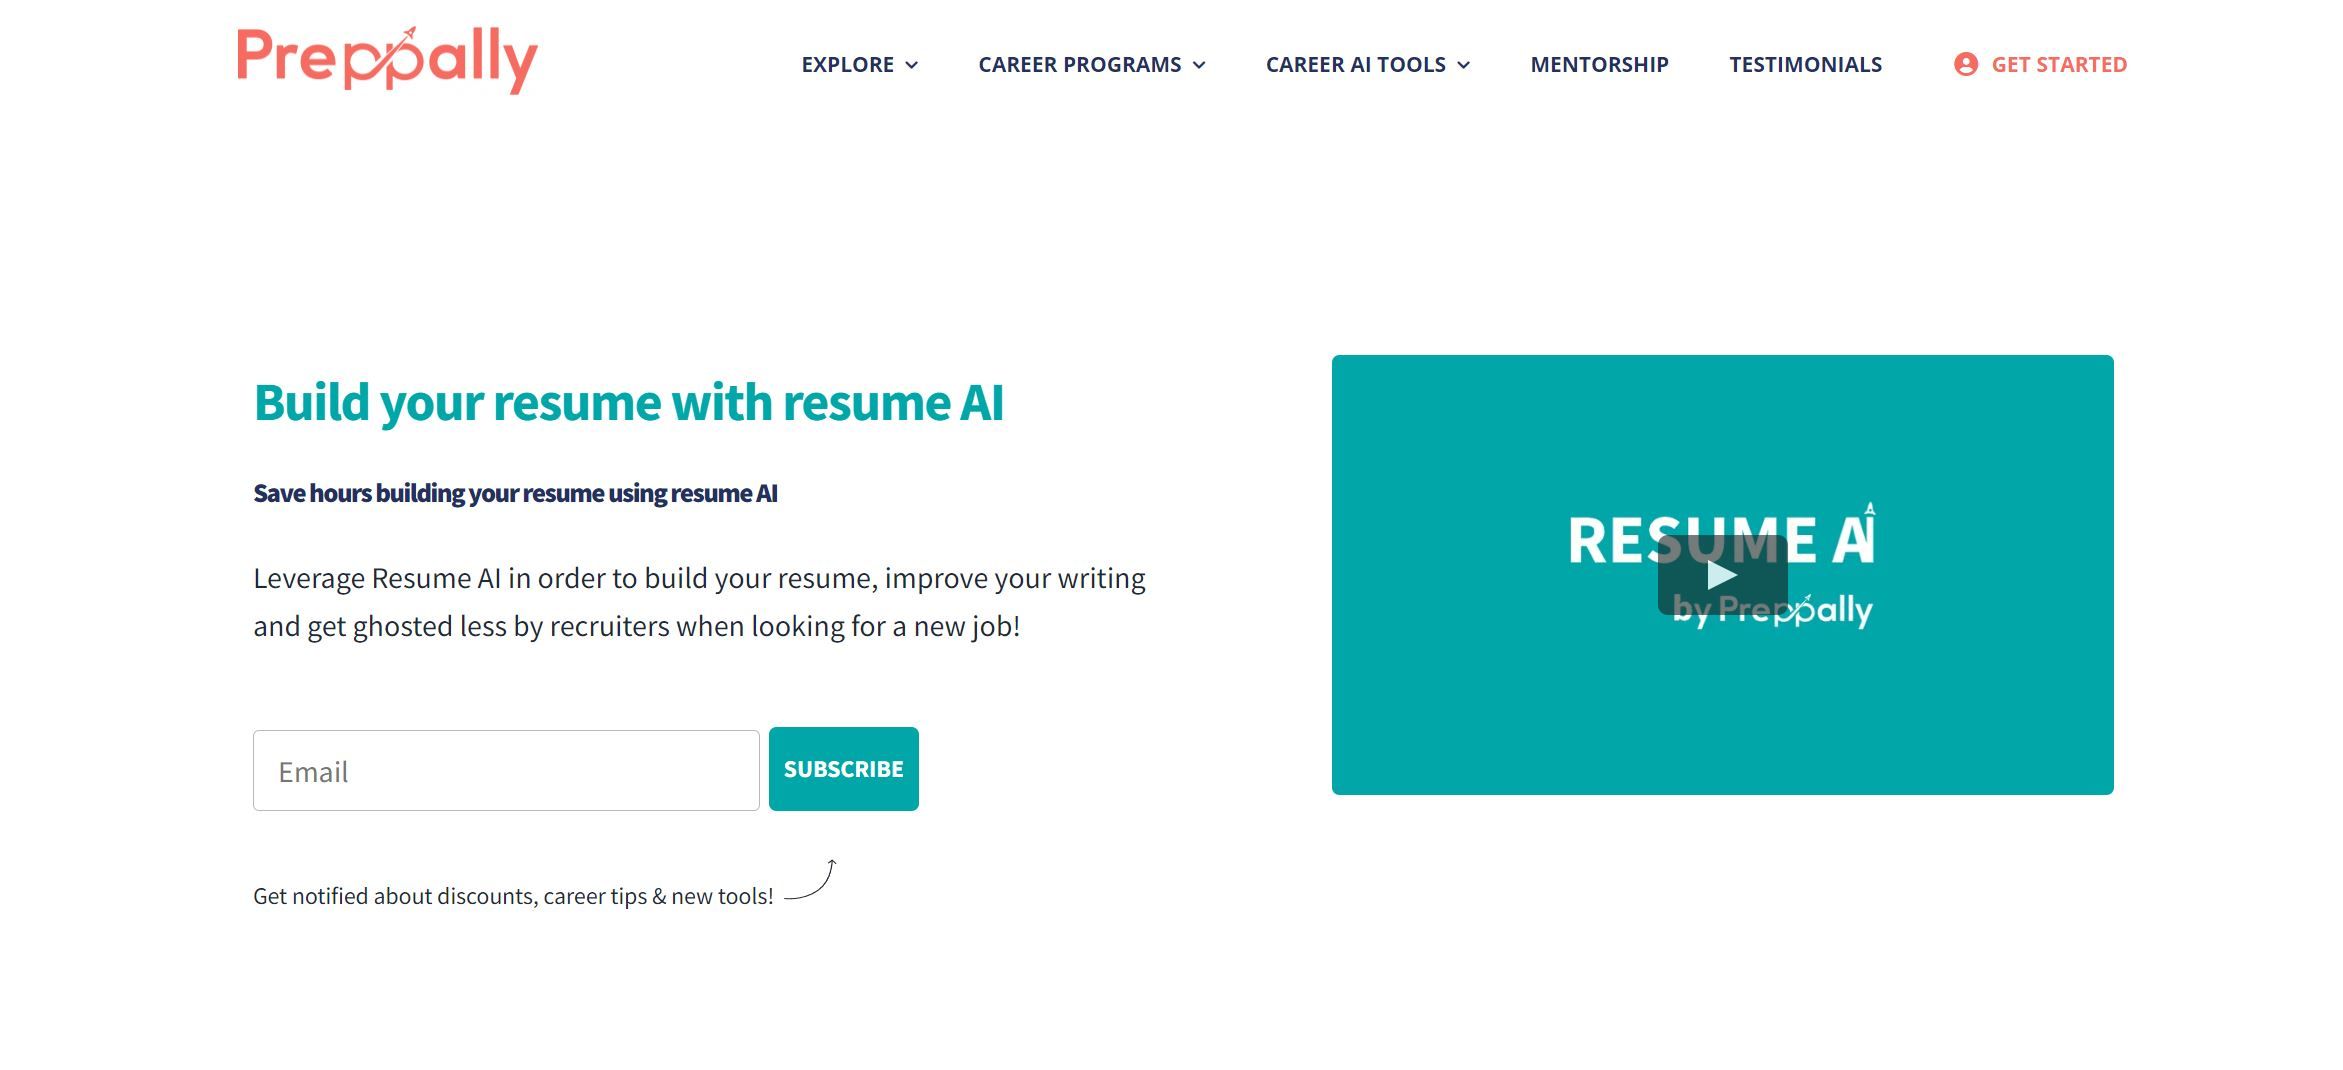 Post: Resume AI